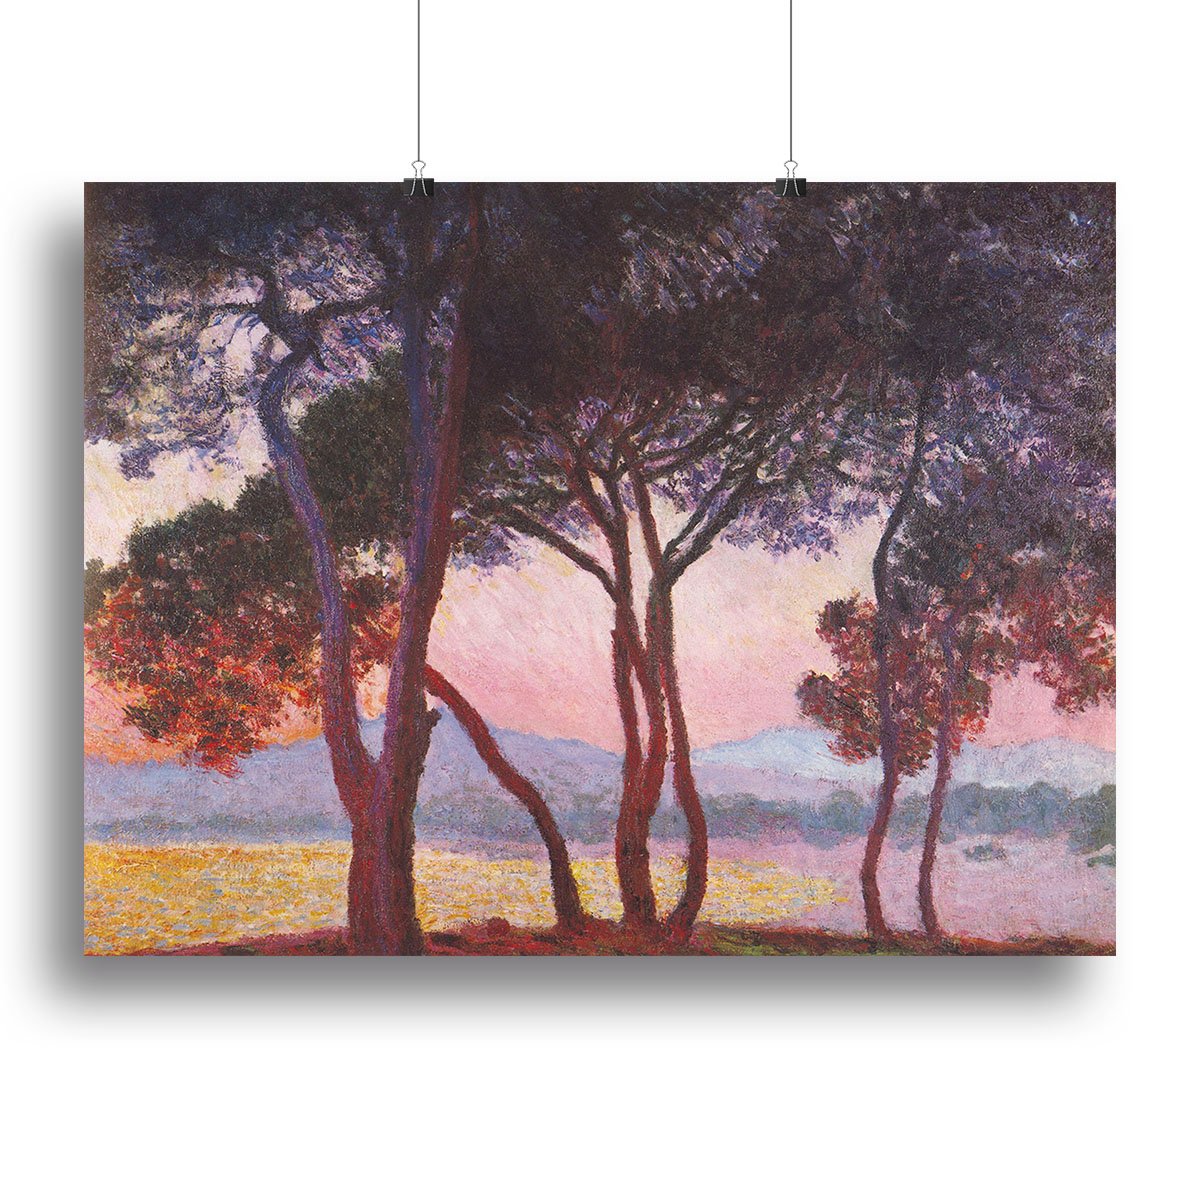 Juan les Pins by Monet Canvas Print or Poster